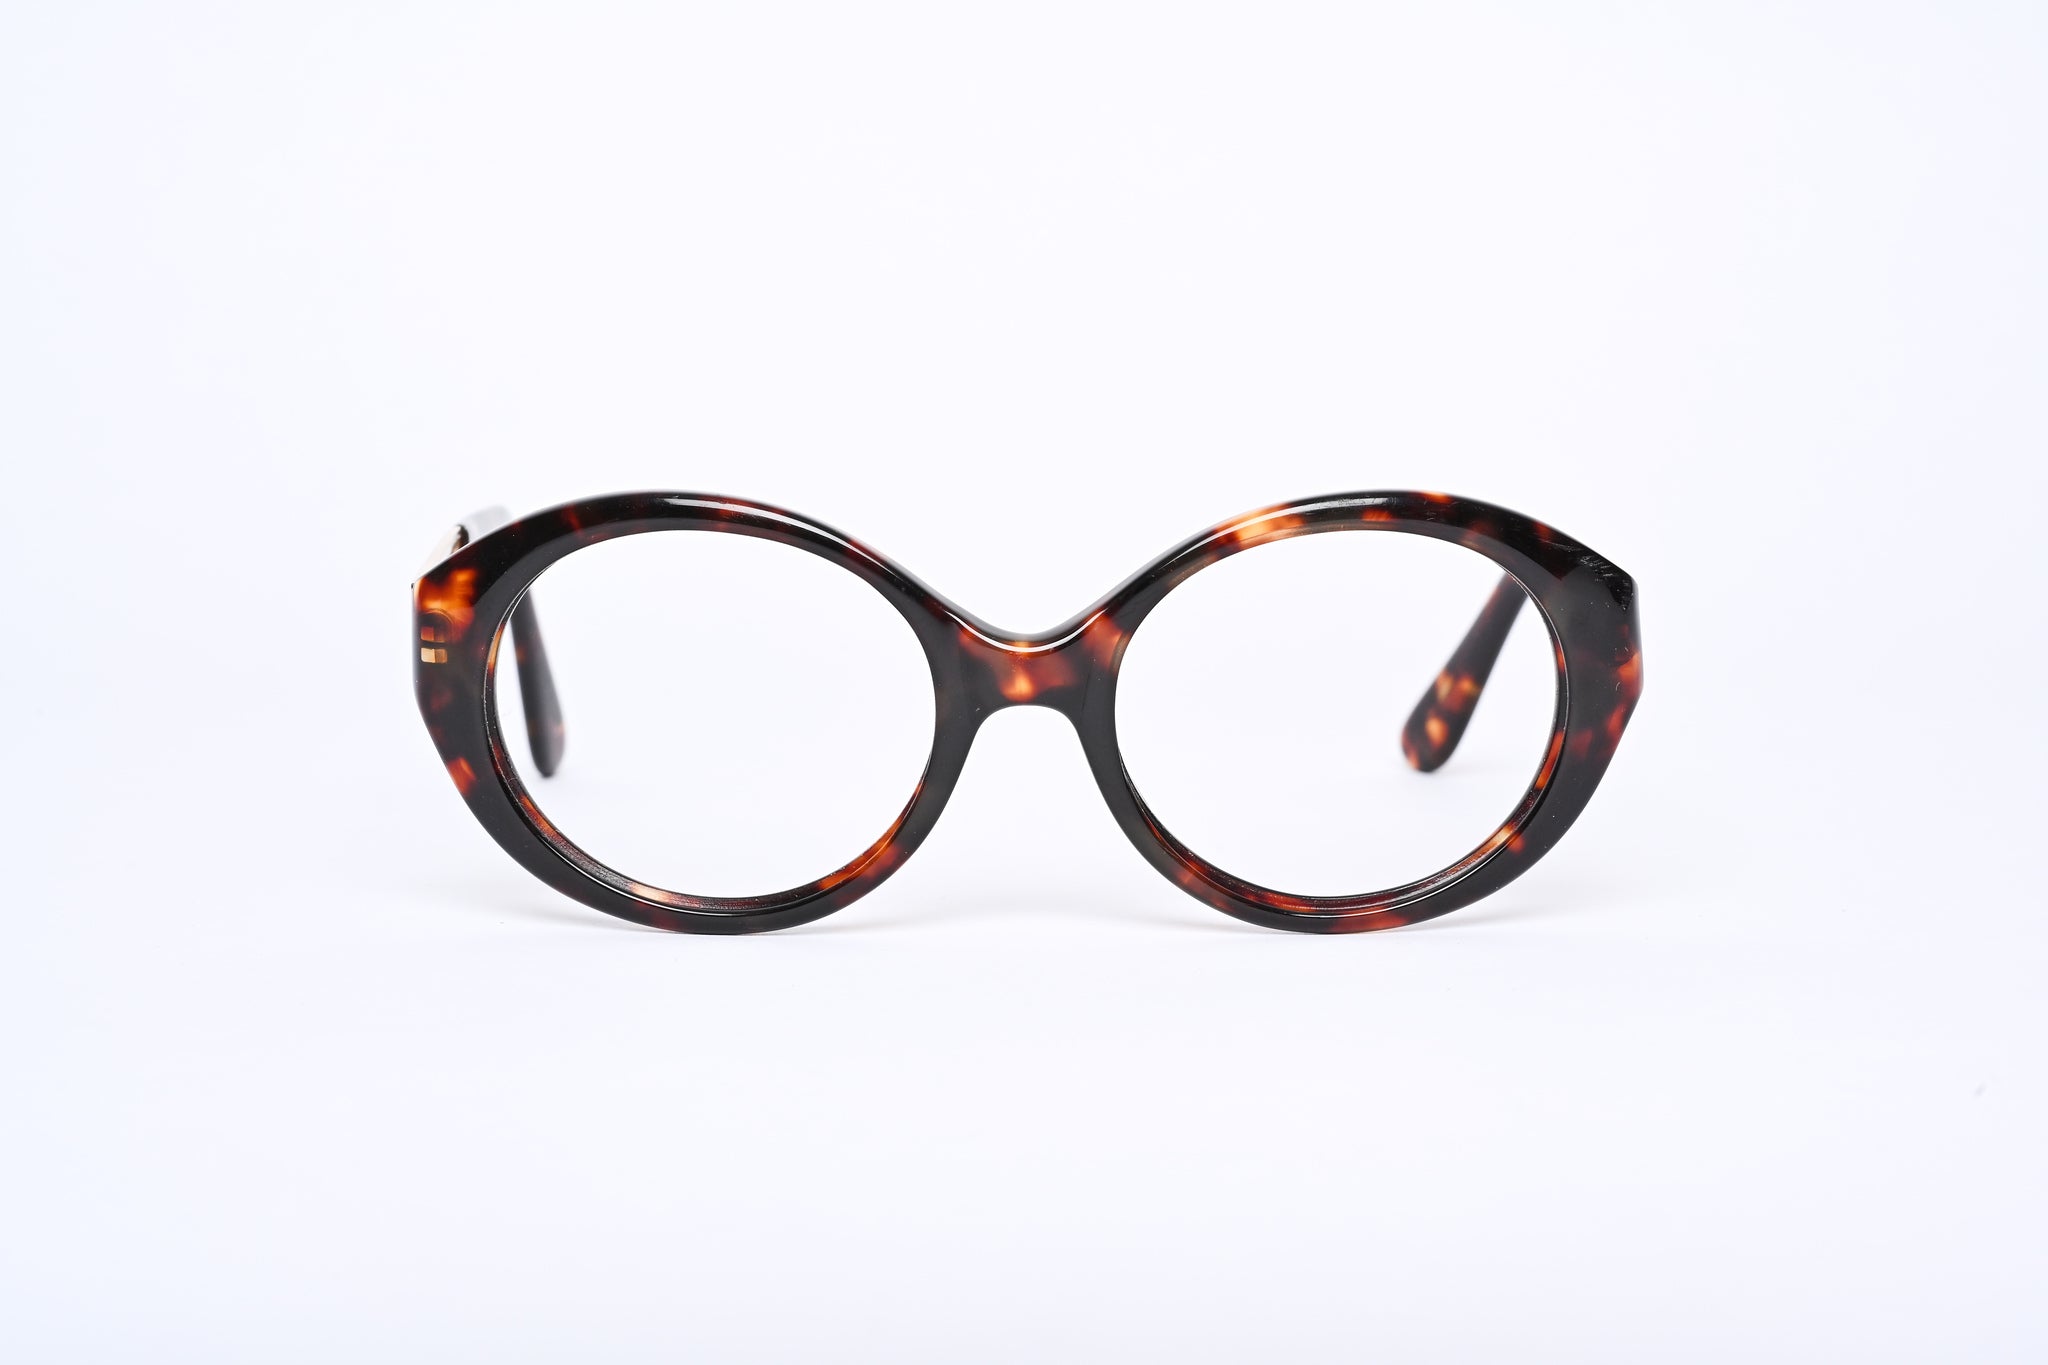 Guess designer glasses. Women's Guess glasses. Brown mottled oval glasses. Women's brown oval shaped glasses.